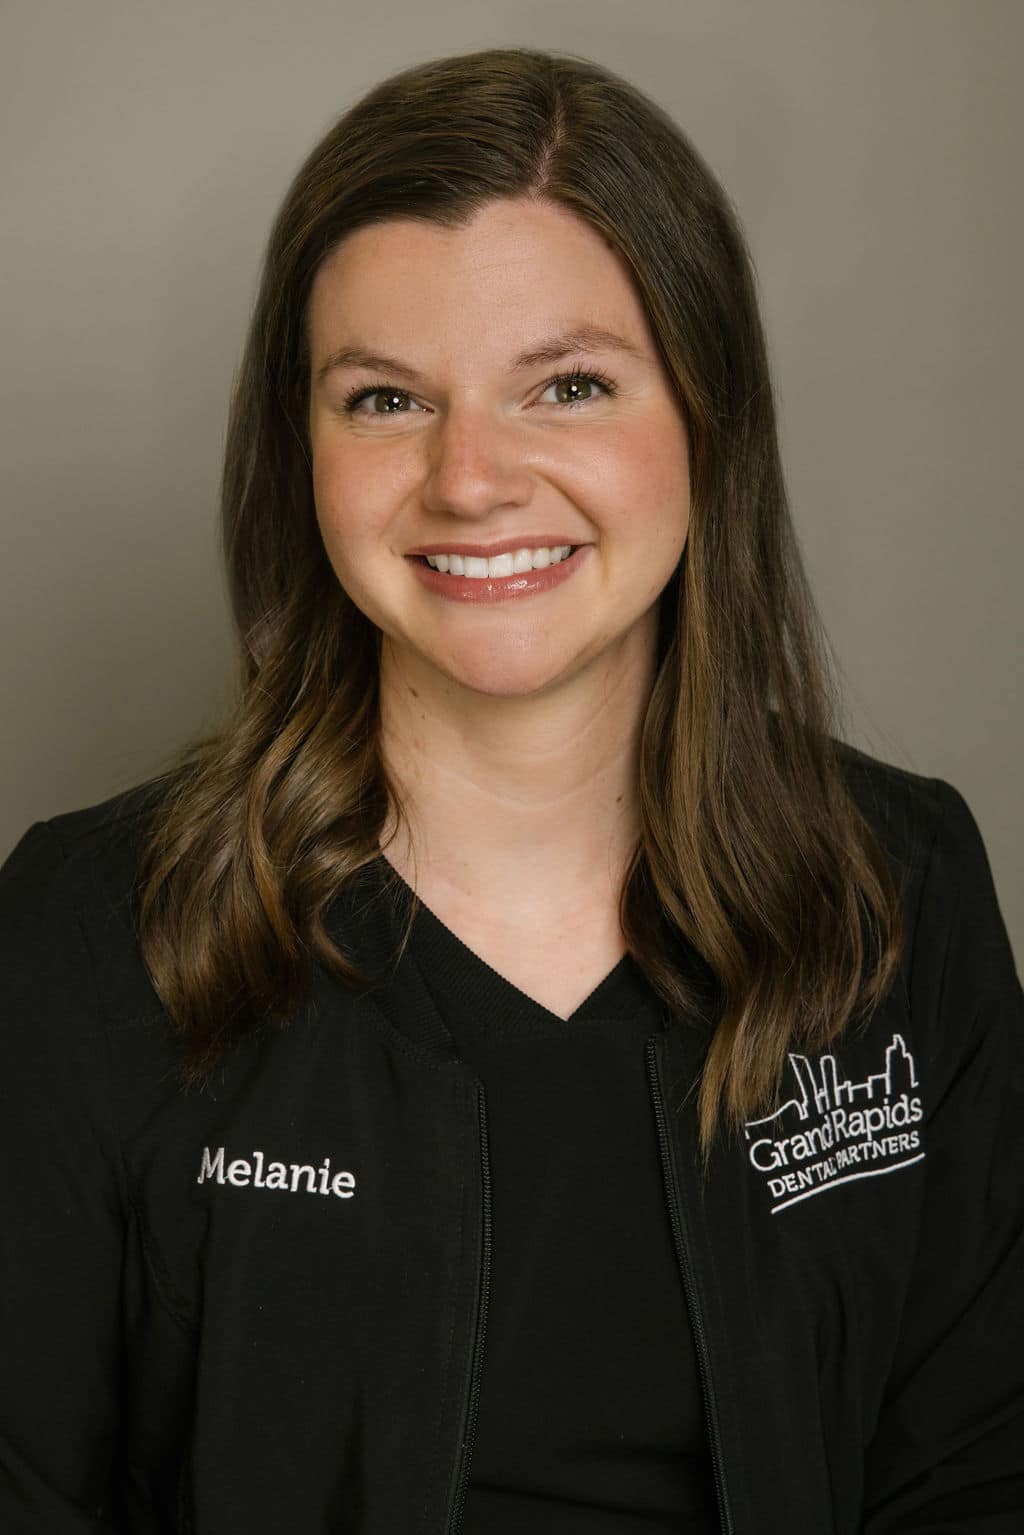 Grand Rapids Dental Partners | Melanie, Dental Hygienist